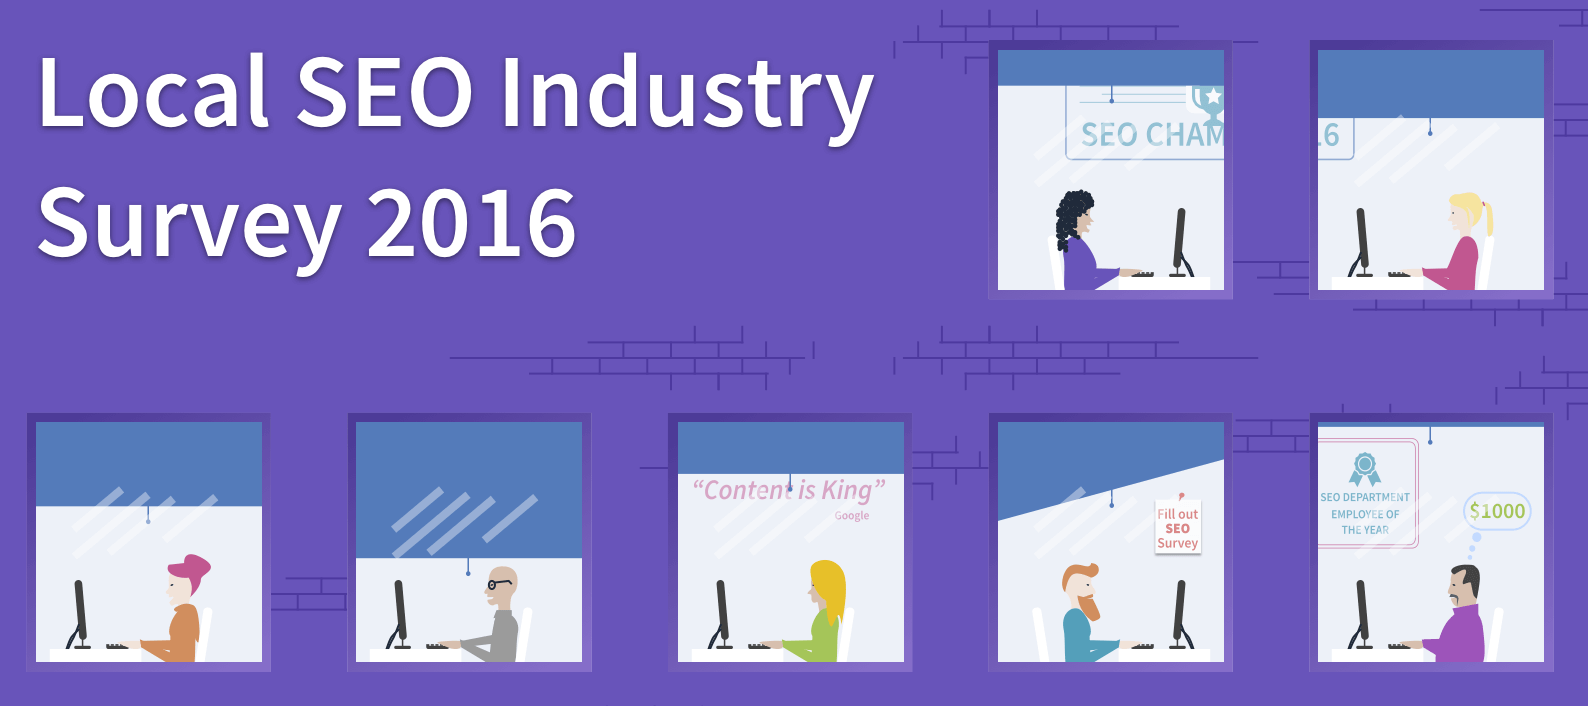 Local SEO Industry Survey 2016 | SEOs Complete Industry Survey